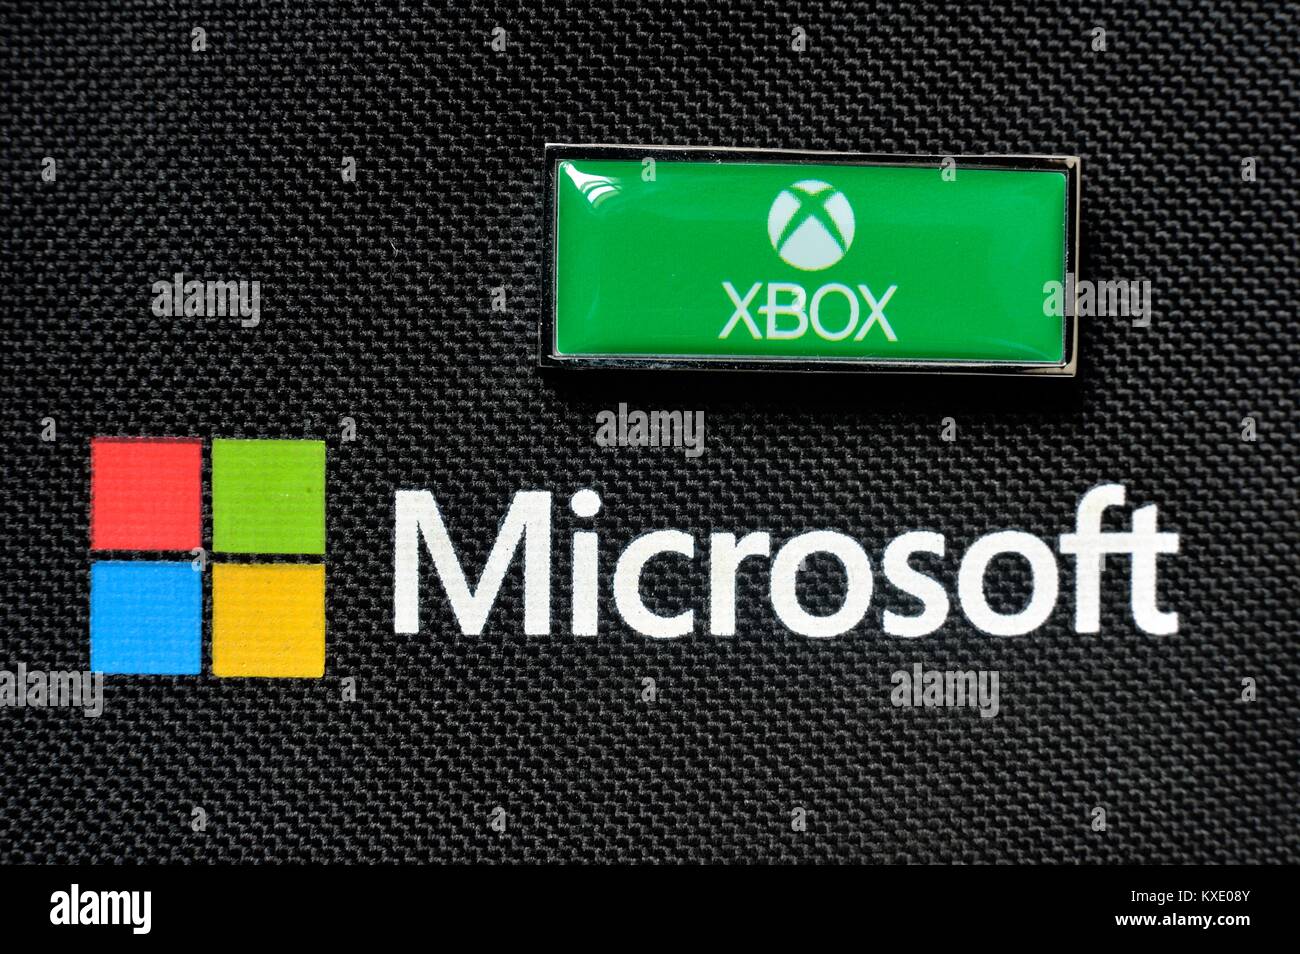 Xbox and Microsoft logos Stock Photo - Alamy